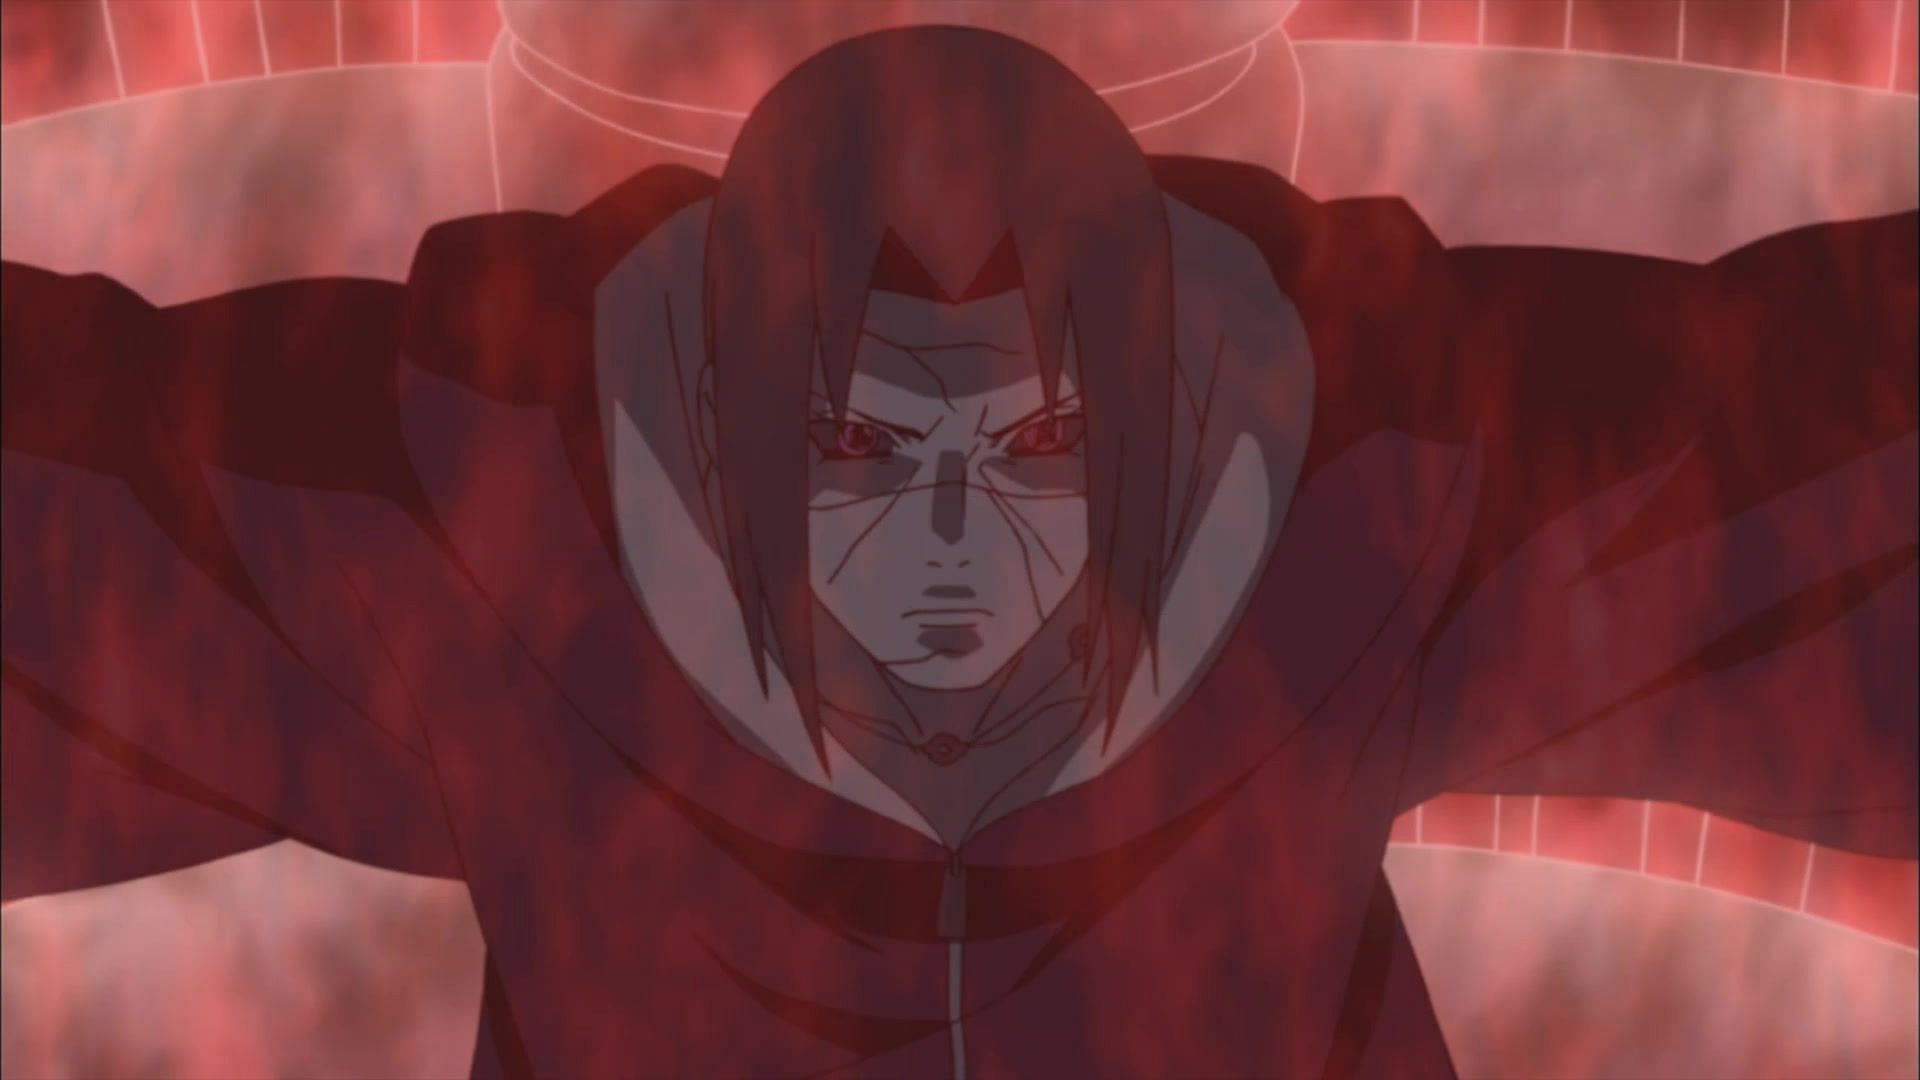 Itachi as seen in Naruto (Image via Studio Pierrot)